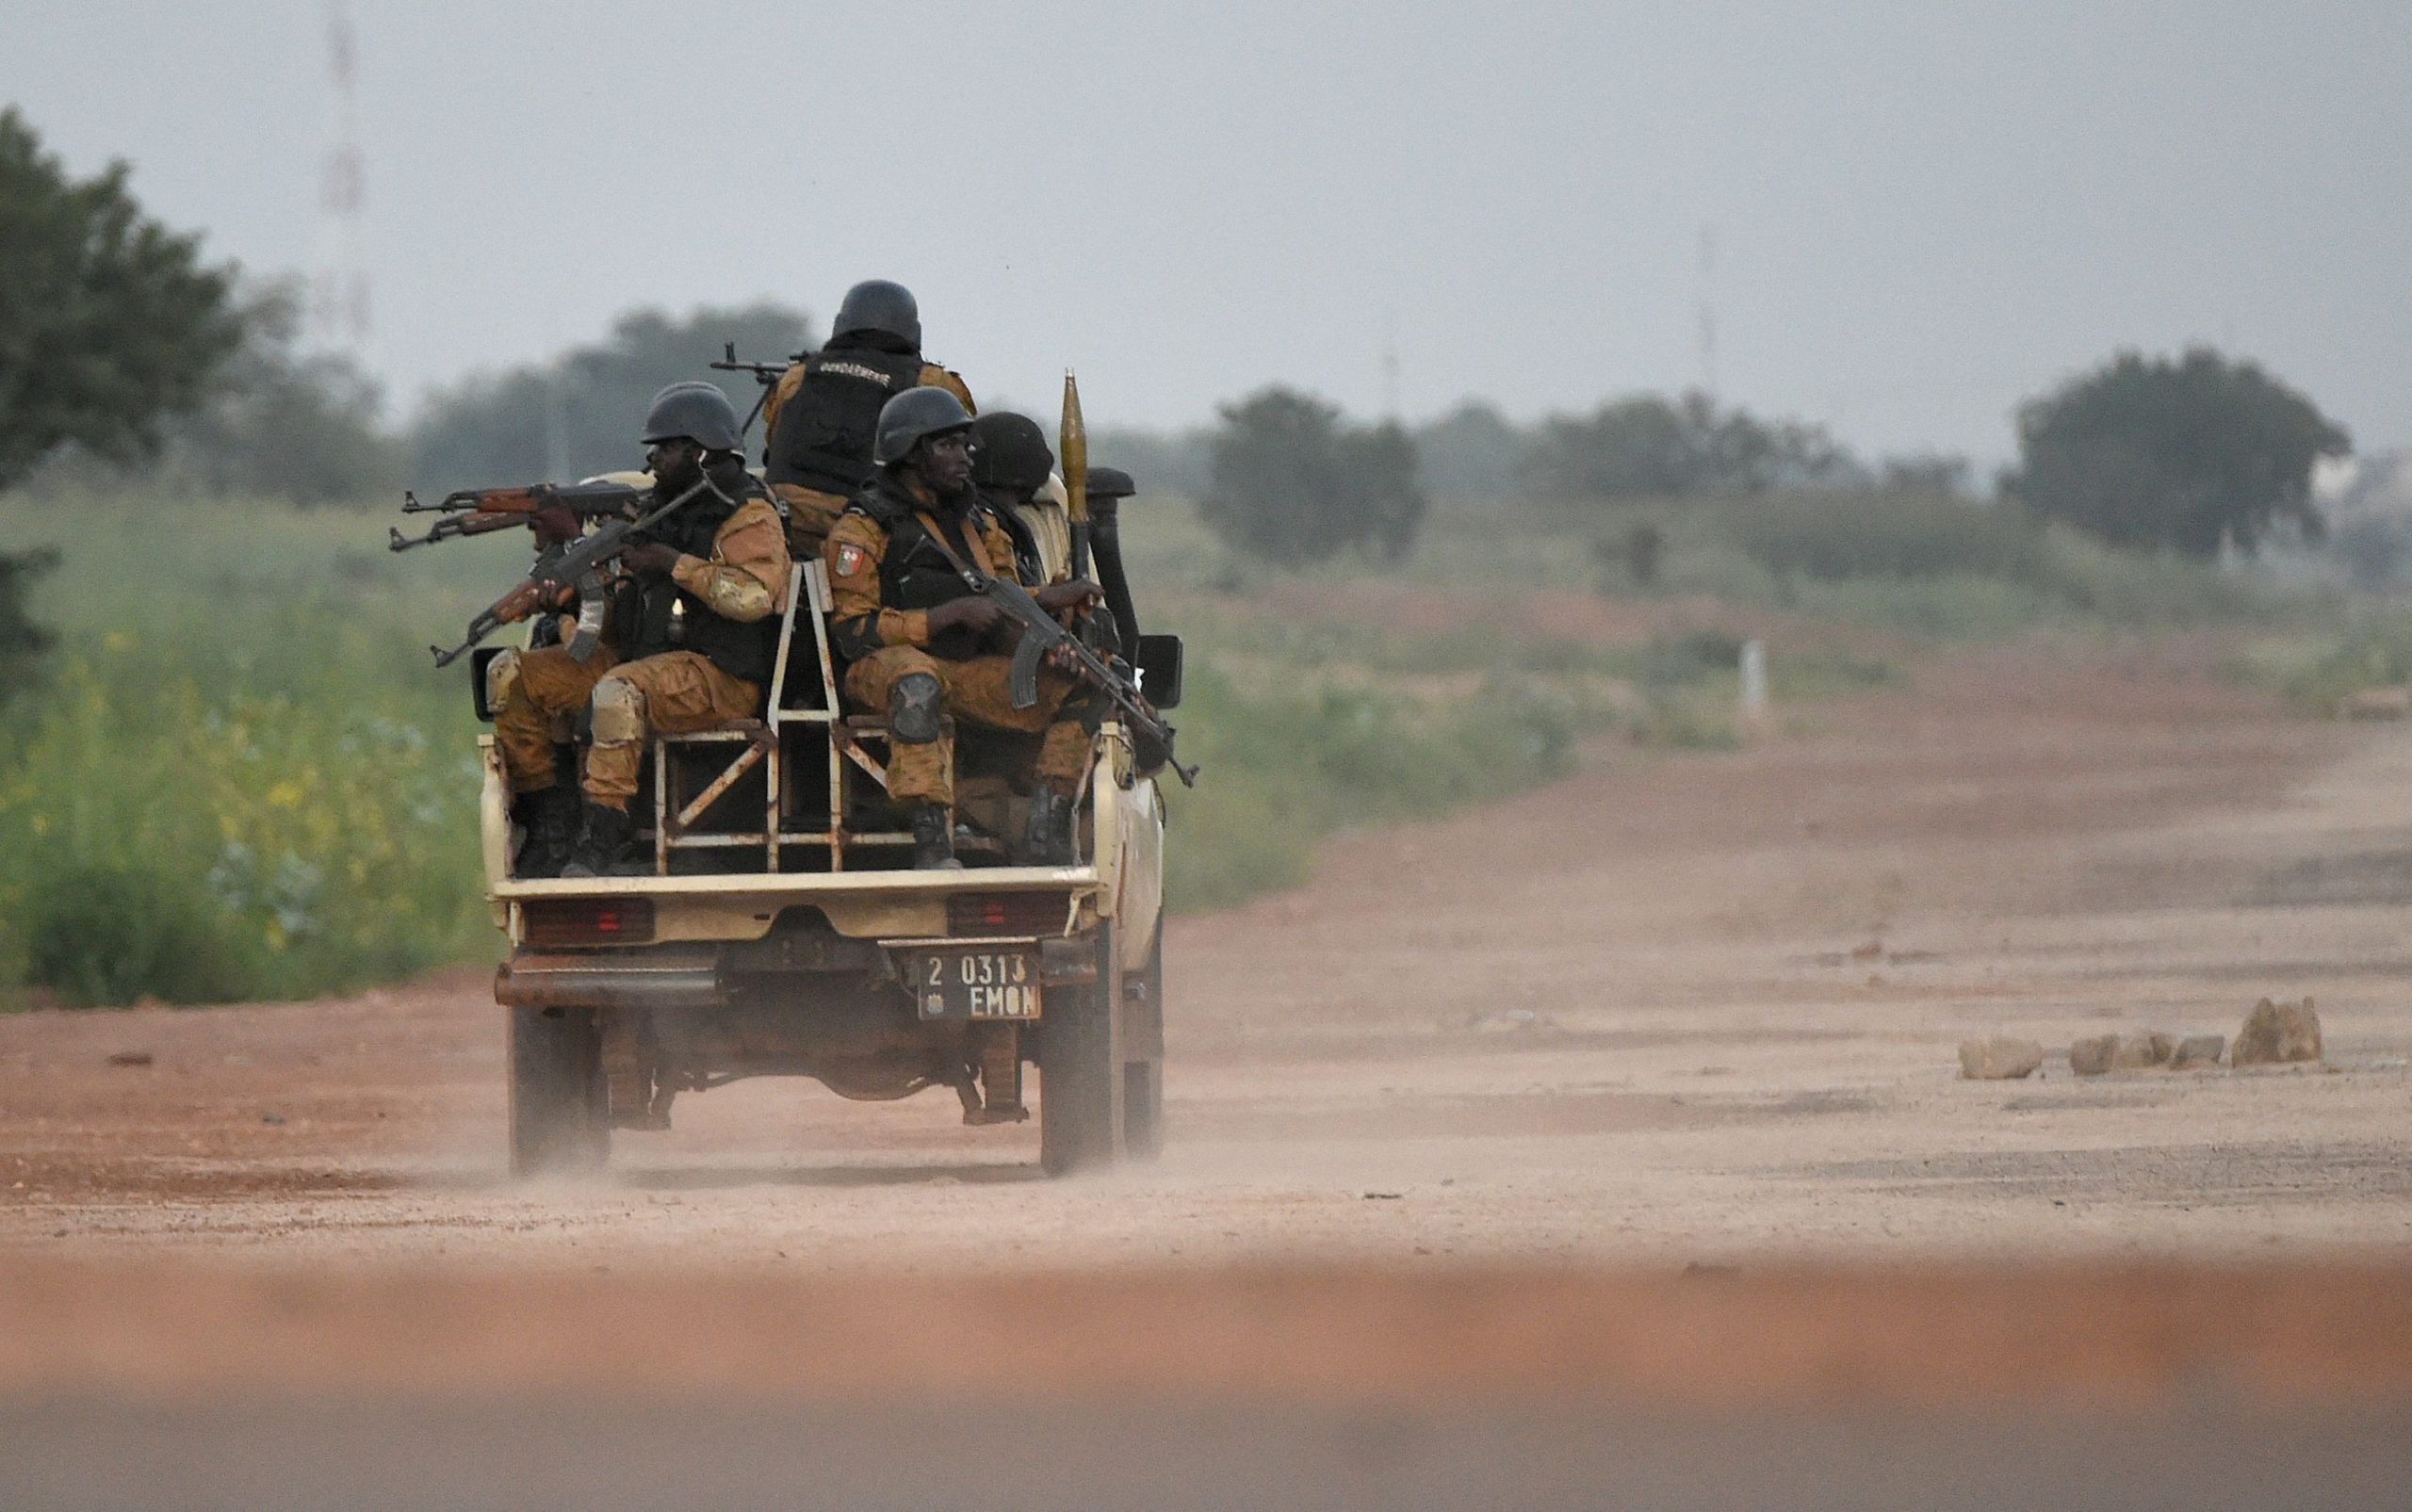 3 European journalists Killed By Terrorists’ In Burkina Faso